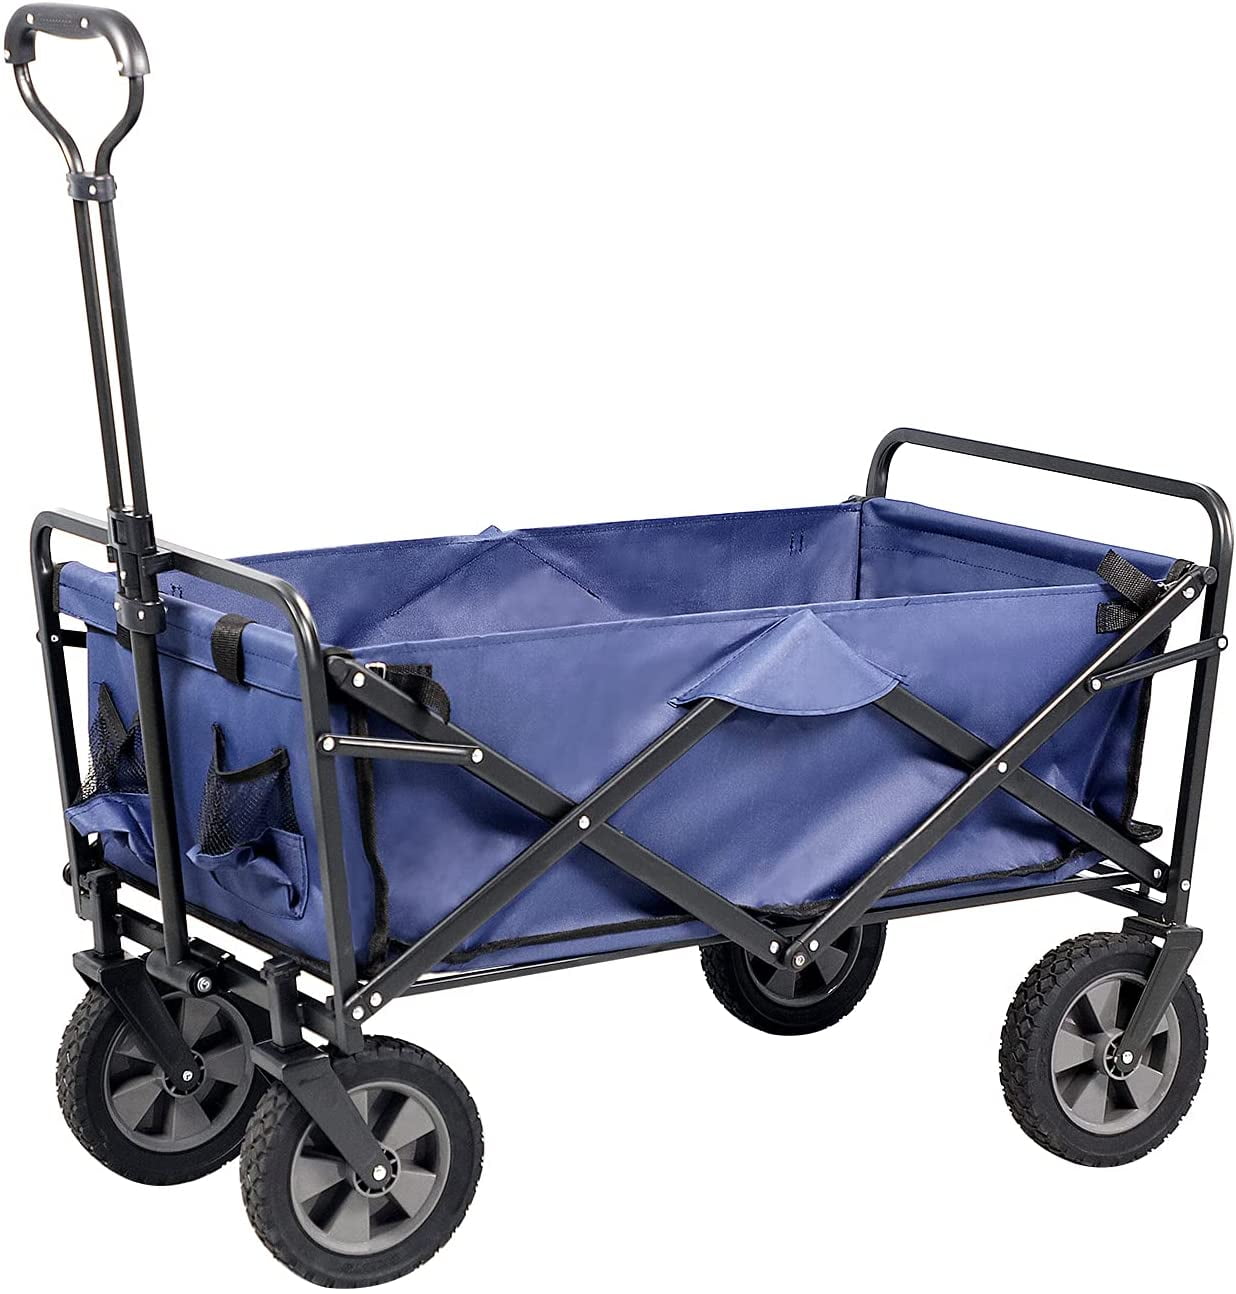 Folding Collapsible Wagon Cart Utility Garden Buggy Camp Beach Sports Cart Blue 